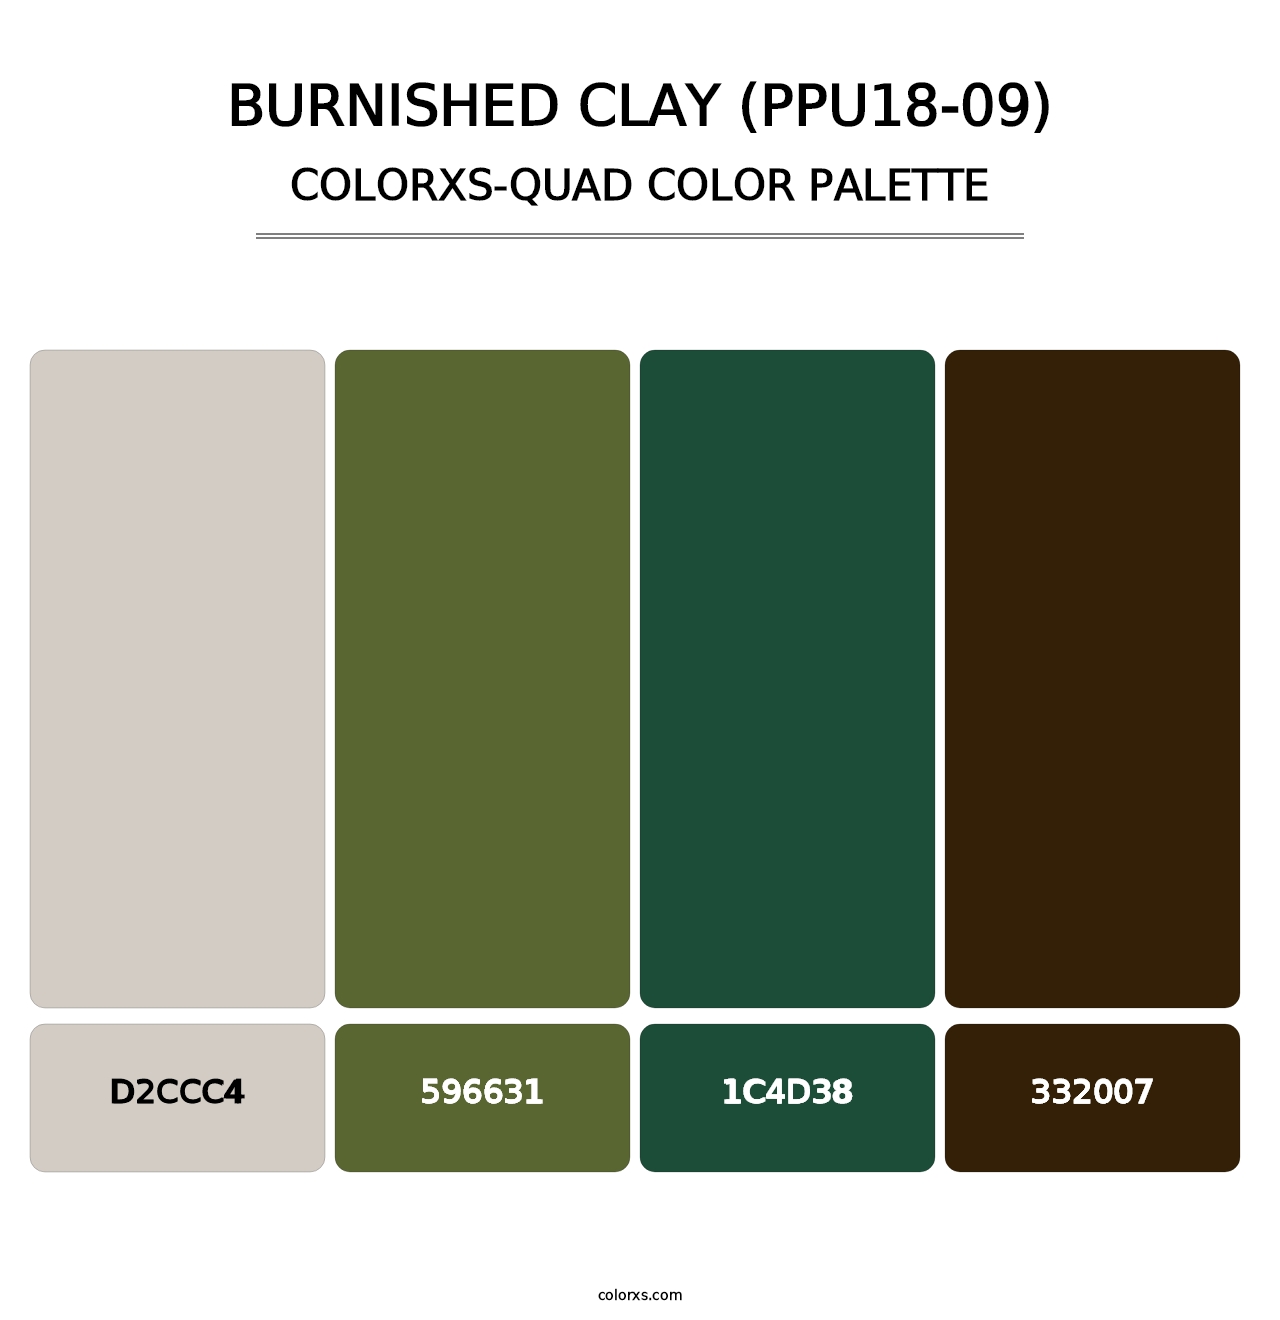 Burnished Clay (PPU18-09) - Colorxs Quad Palette